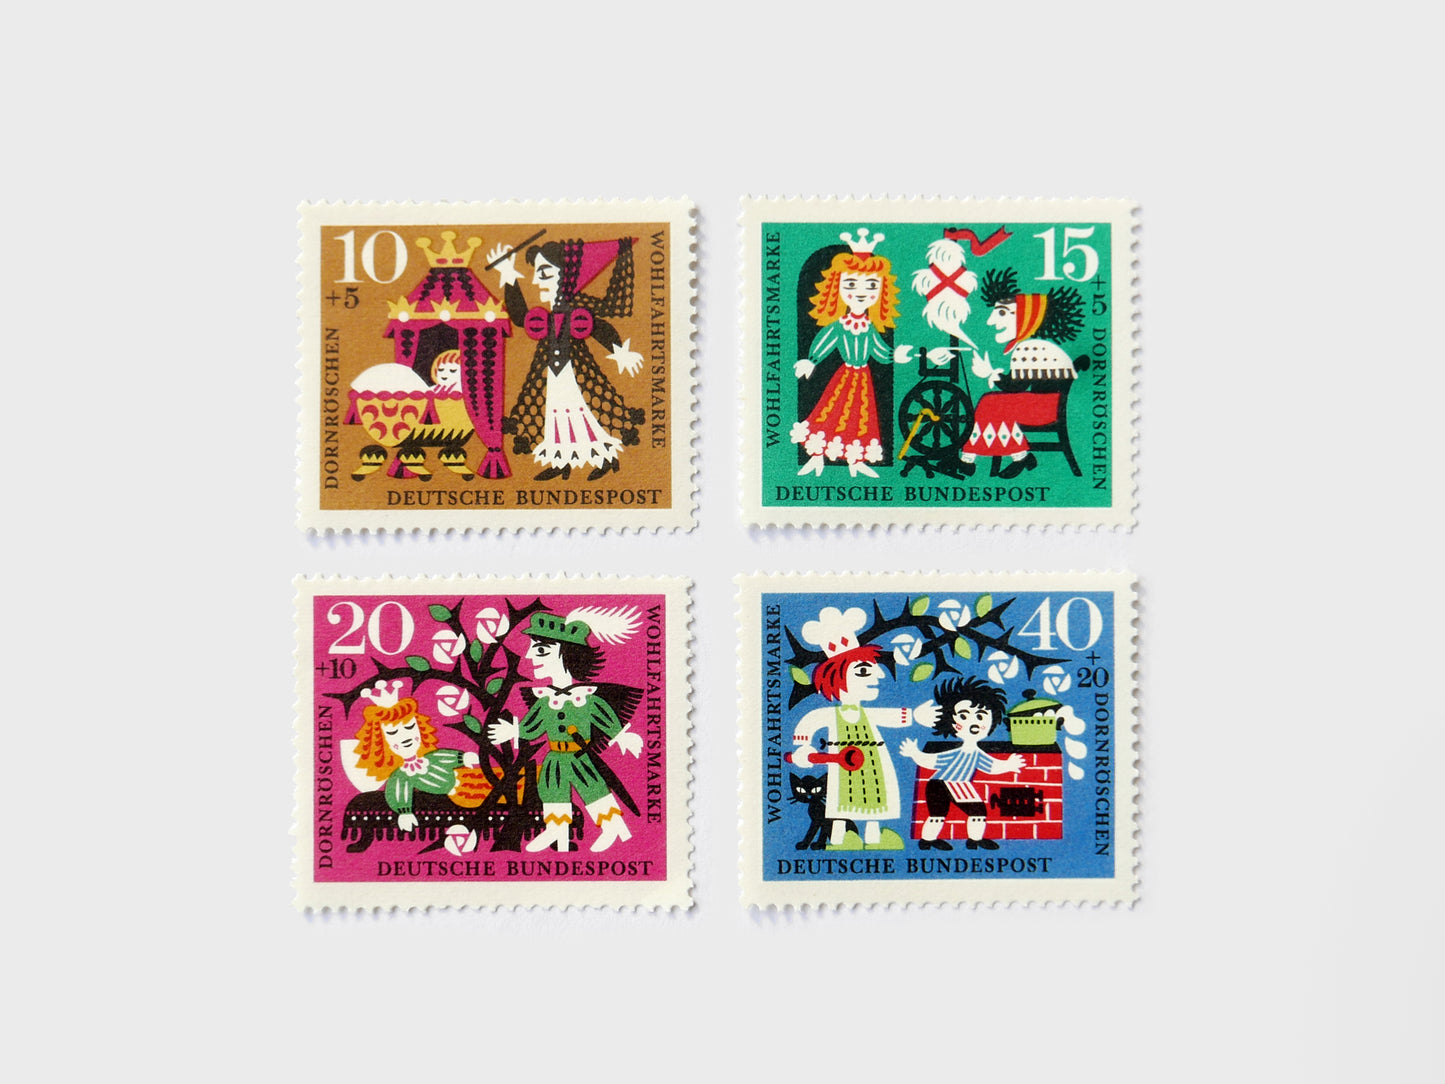 Sleeping Beauty Stamp set (1960)